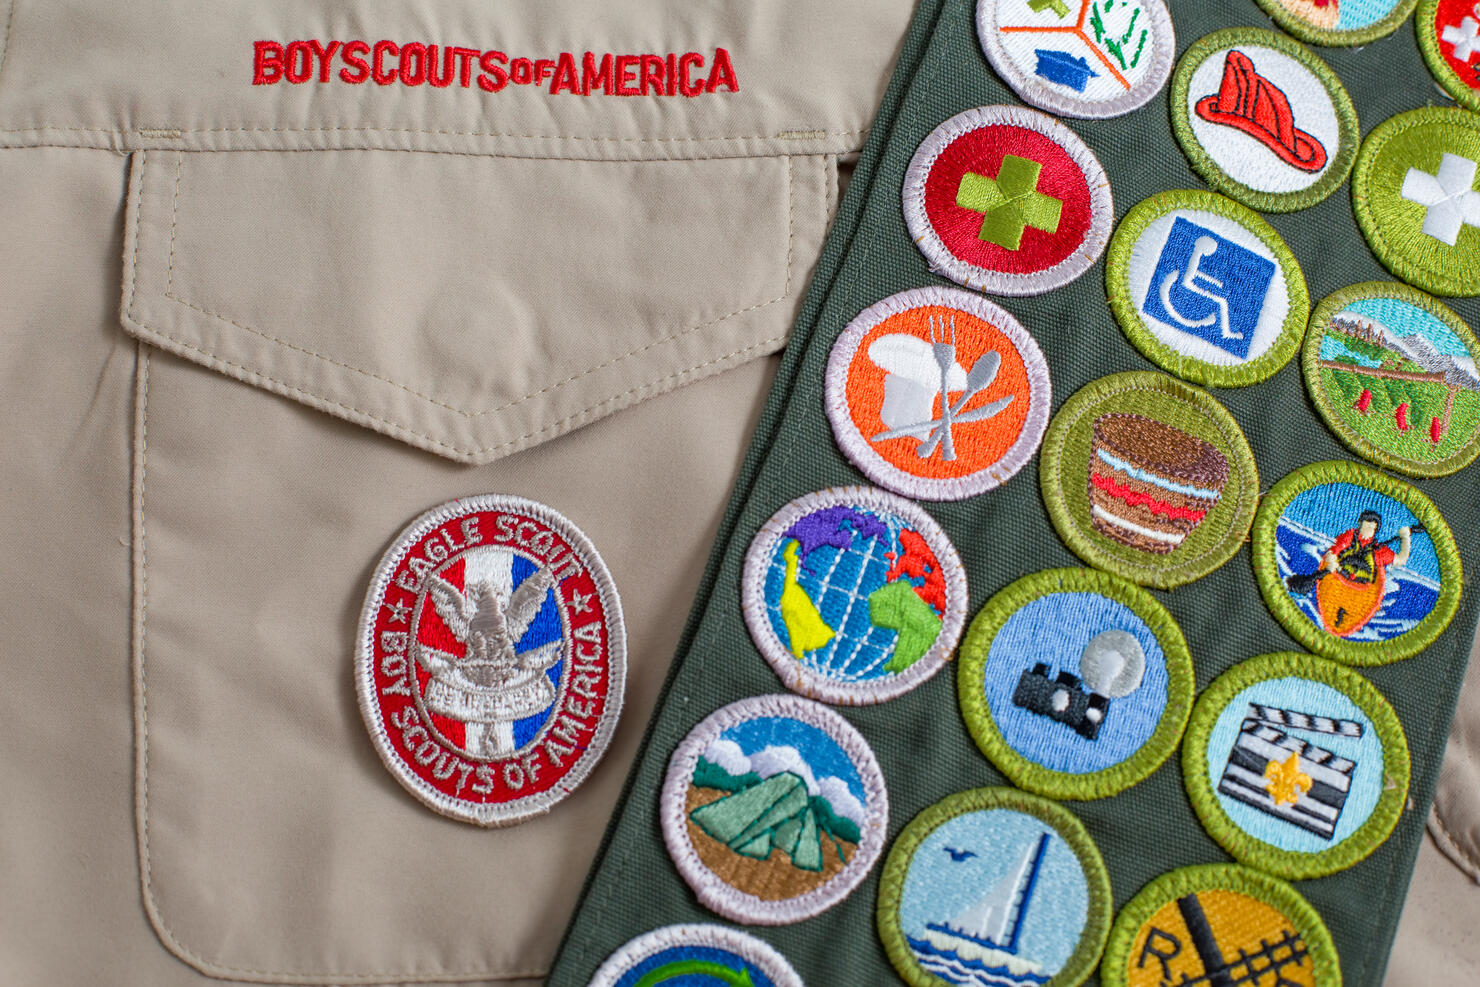 Eagle patch and merit badge sash on boy scout uniform